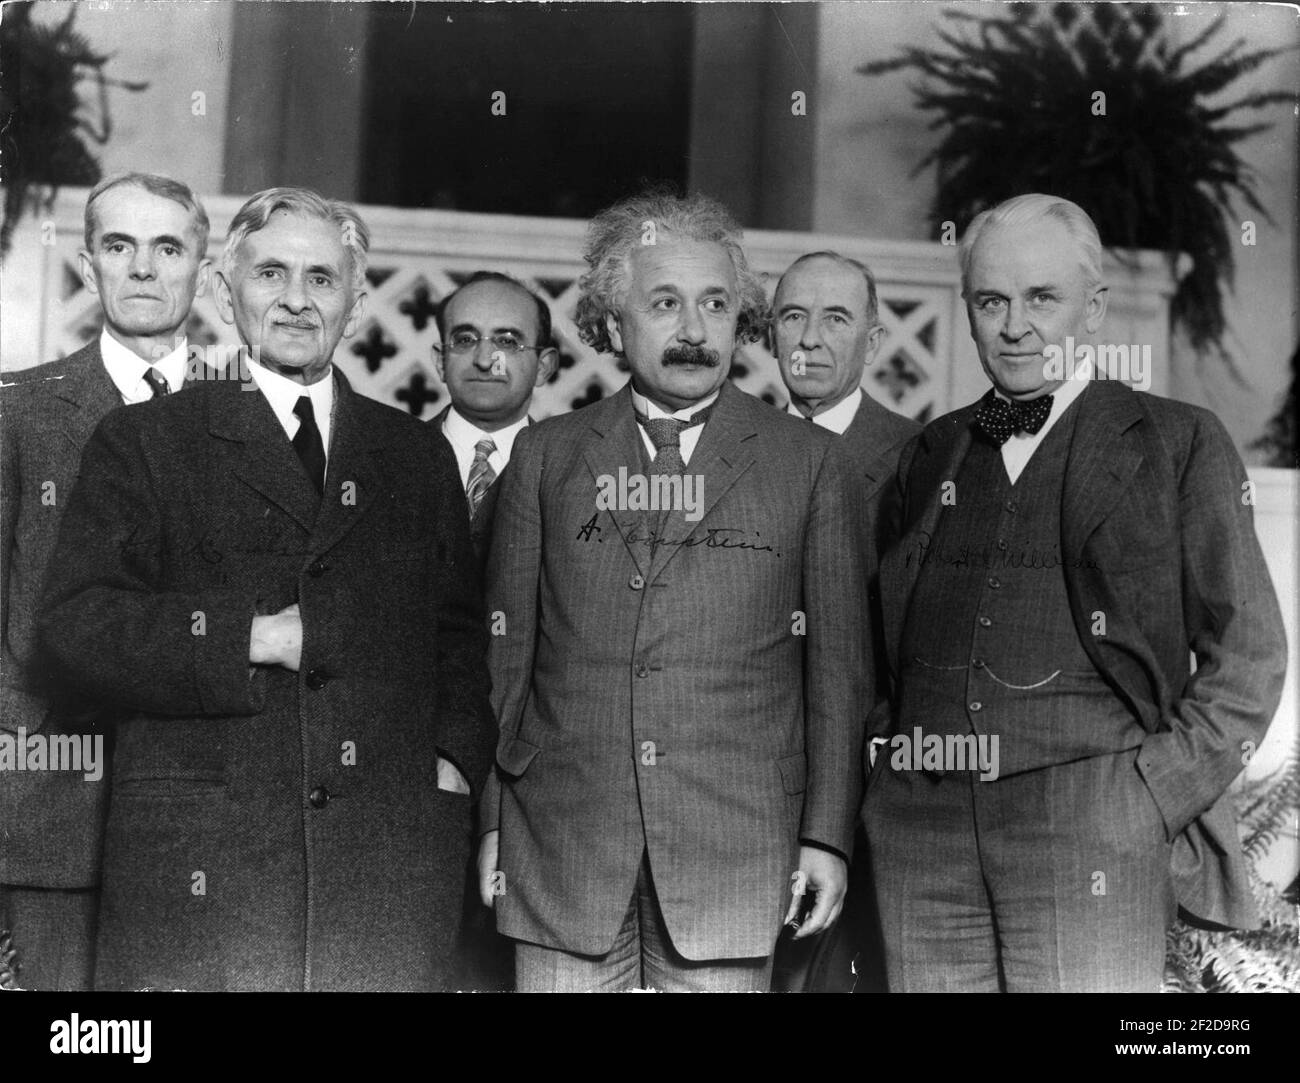 Portrait of Albert Einstein and Others (1879-1955), Physicist. Stock Photo